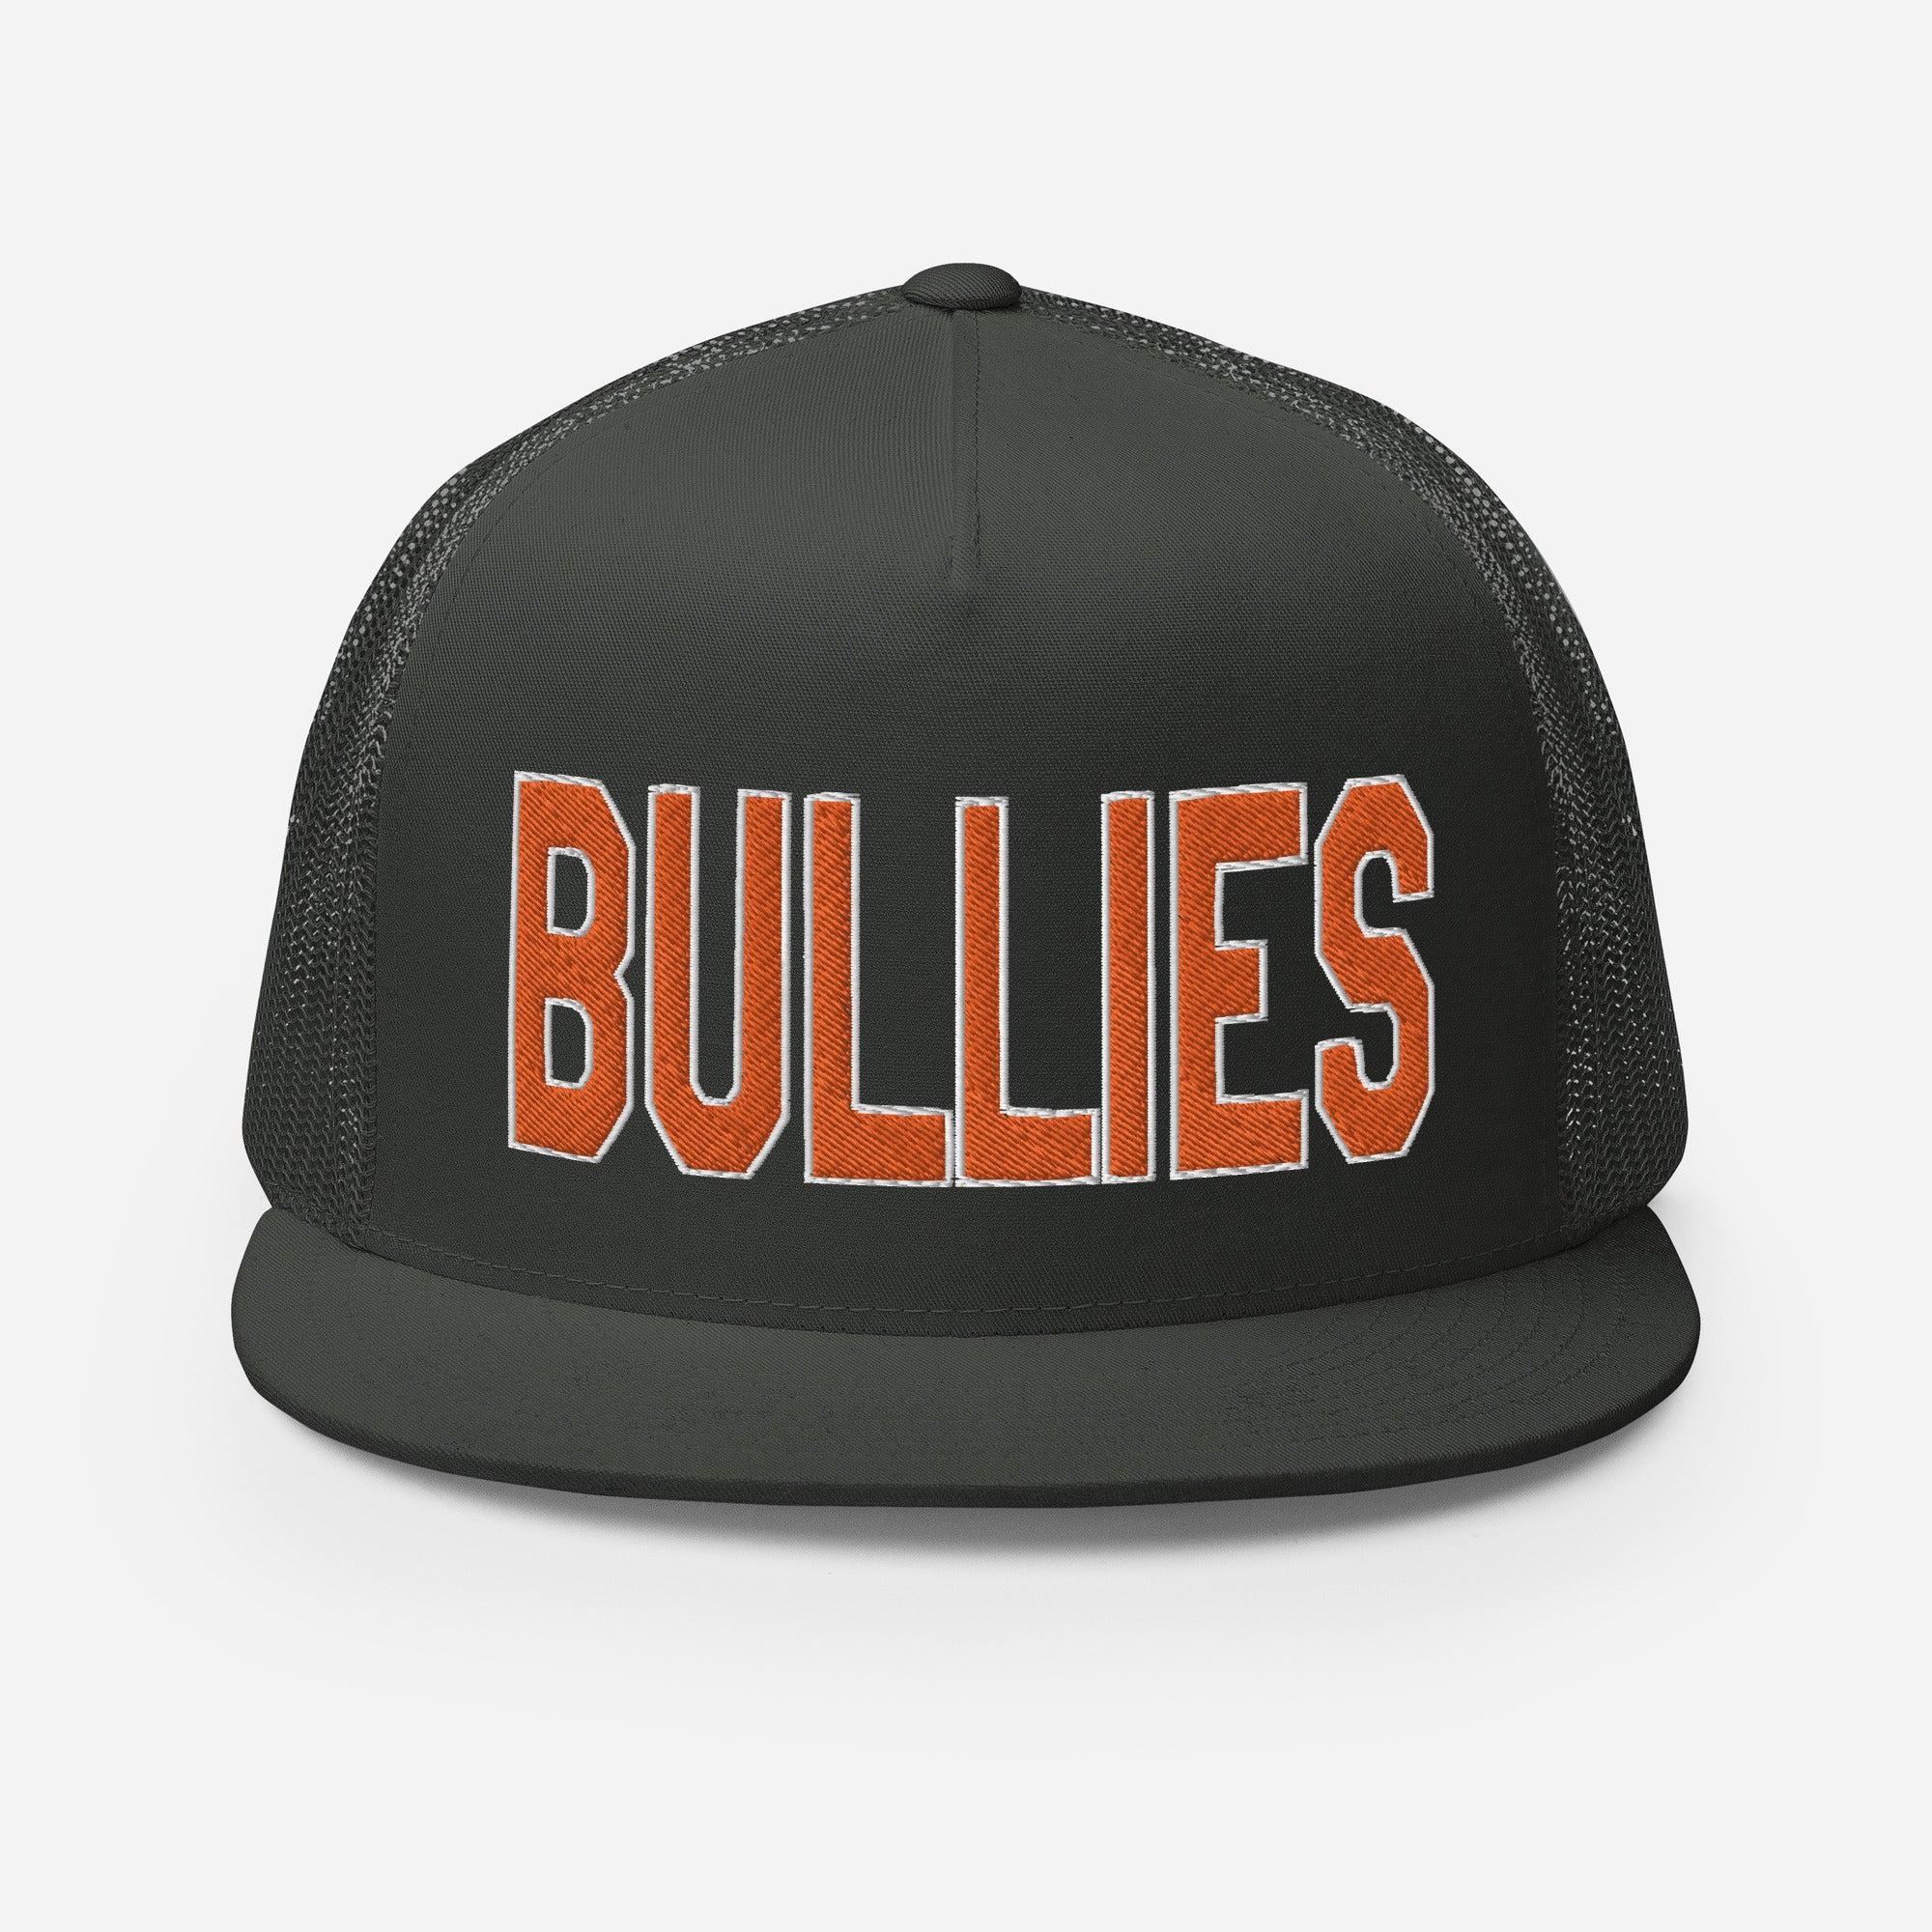 "Bullies" Trucker Hat